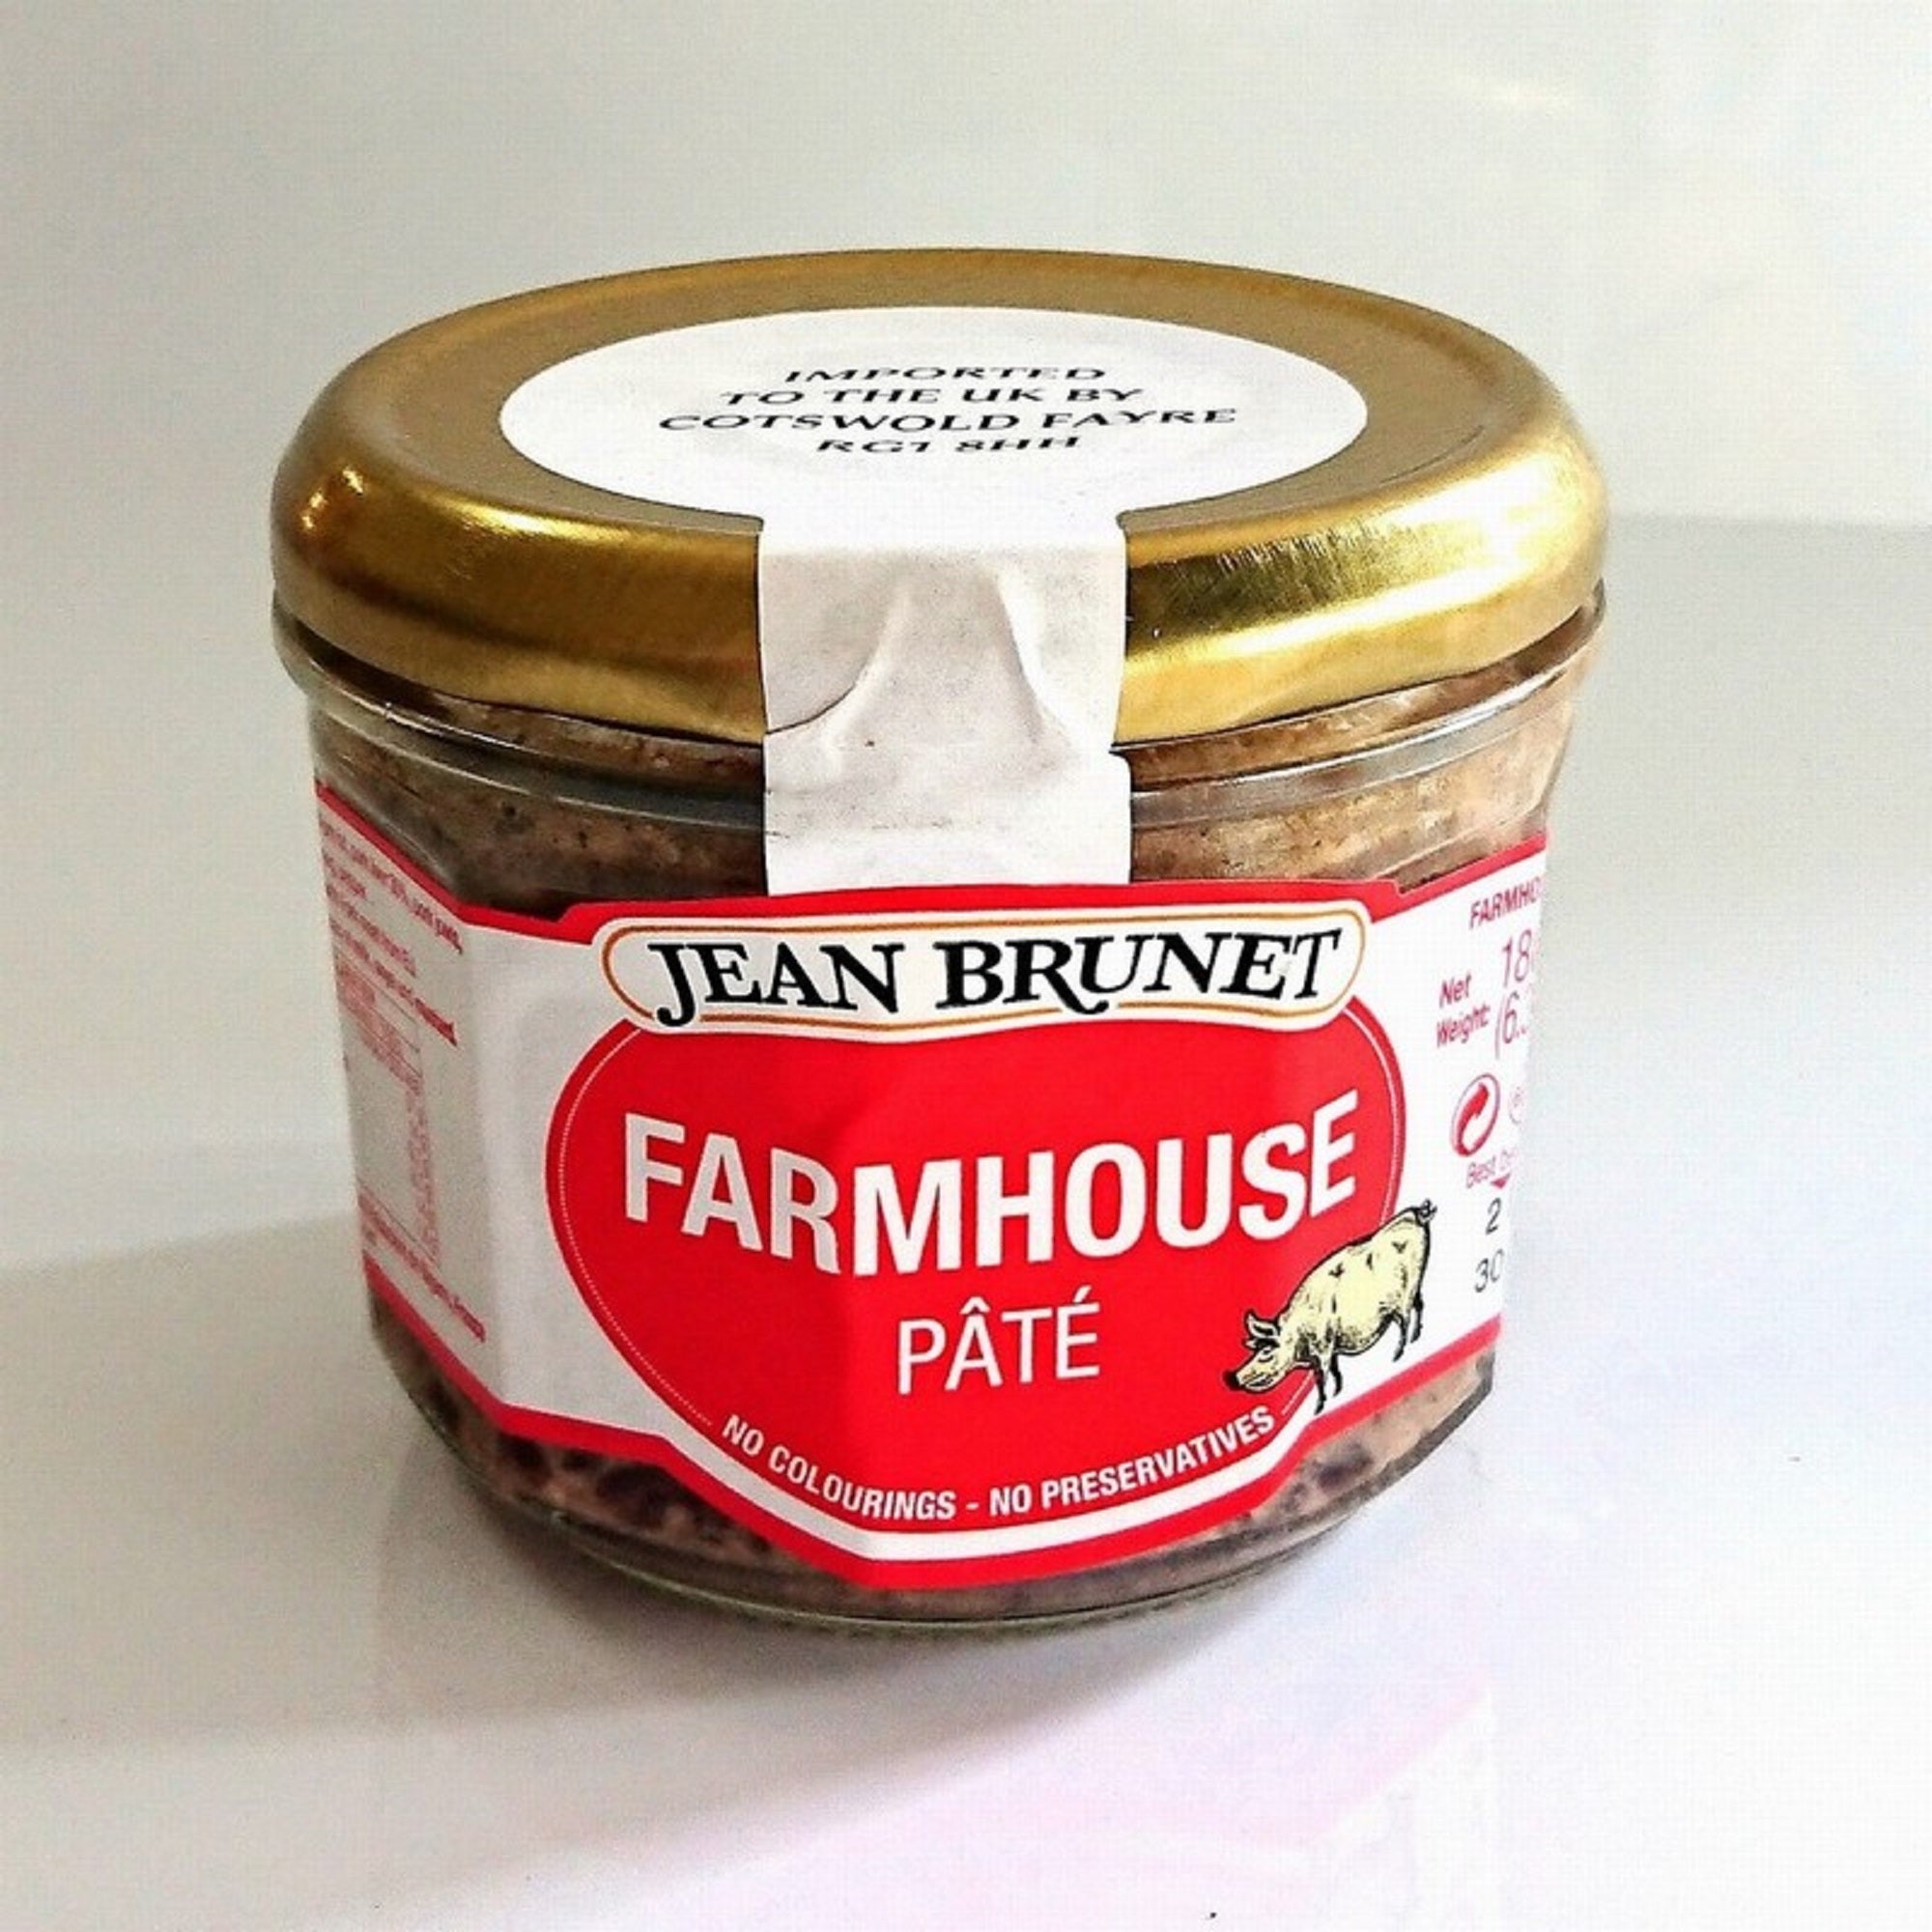 JEAN BRUNET FARMHOUSE PATE 180g